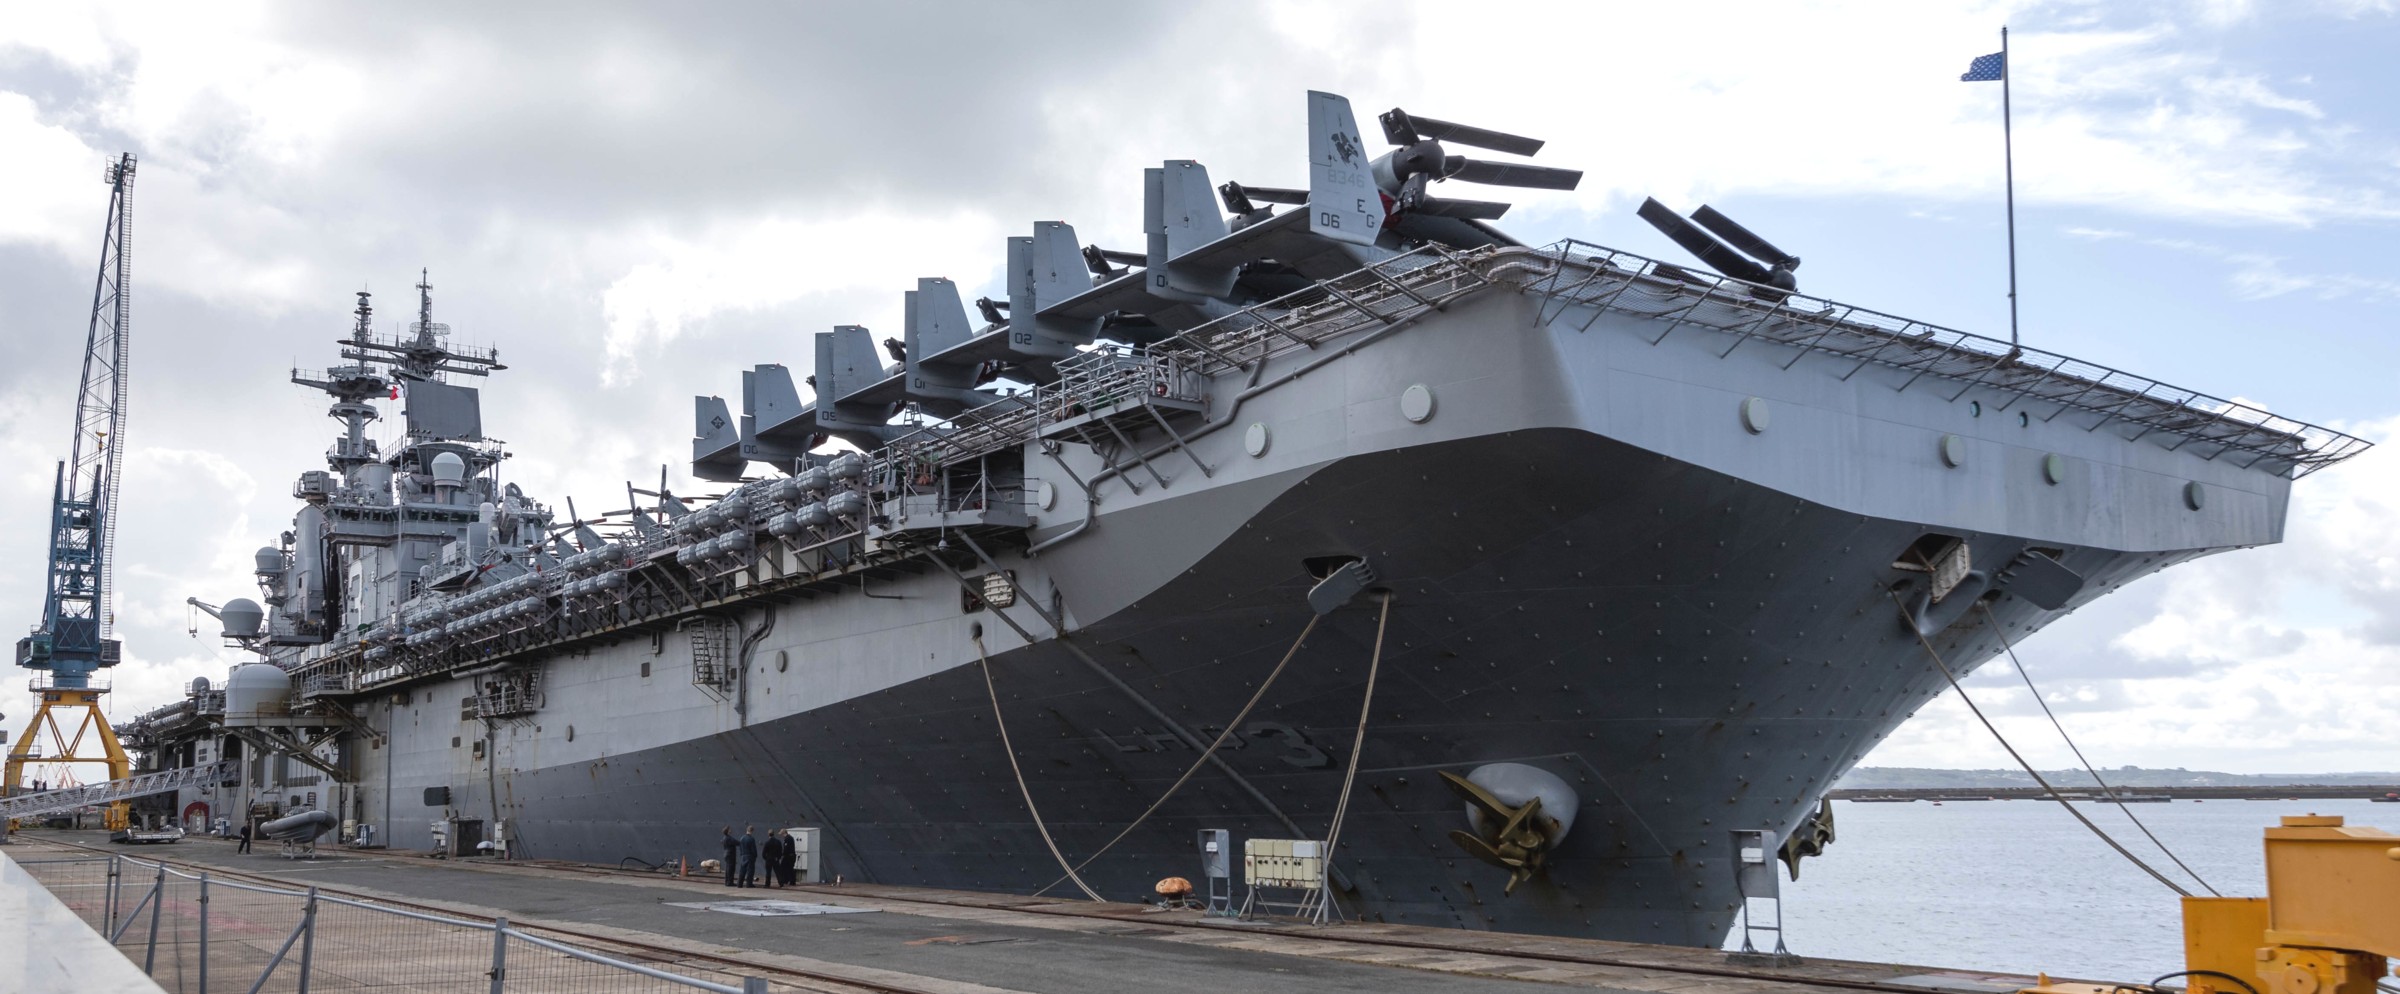 lhd-3 uss kearsarge wasp class amphibious assault ship us navy marines vmm-263 brest france 245